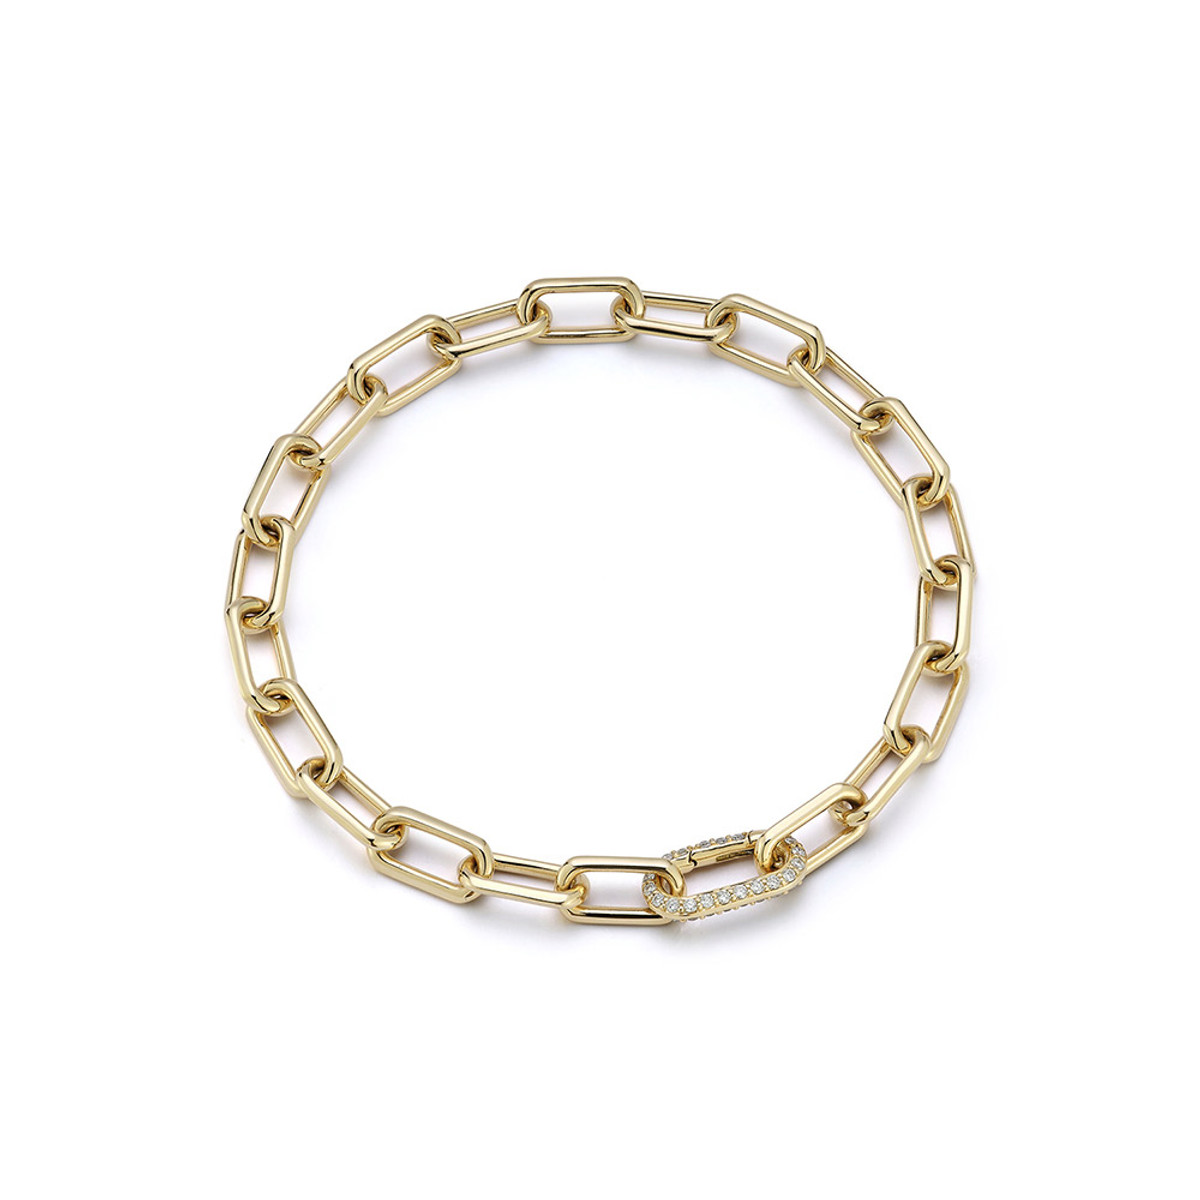 Walters Faith Saxon 18K Yellow Gold Chain Link Bracelet-61717 Product Image